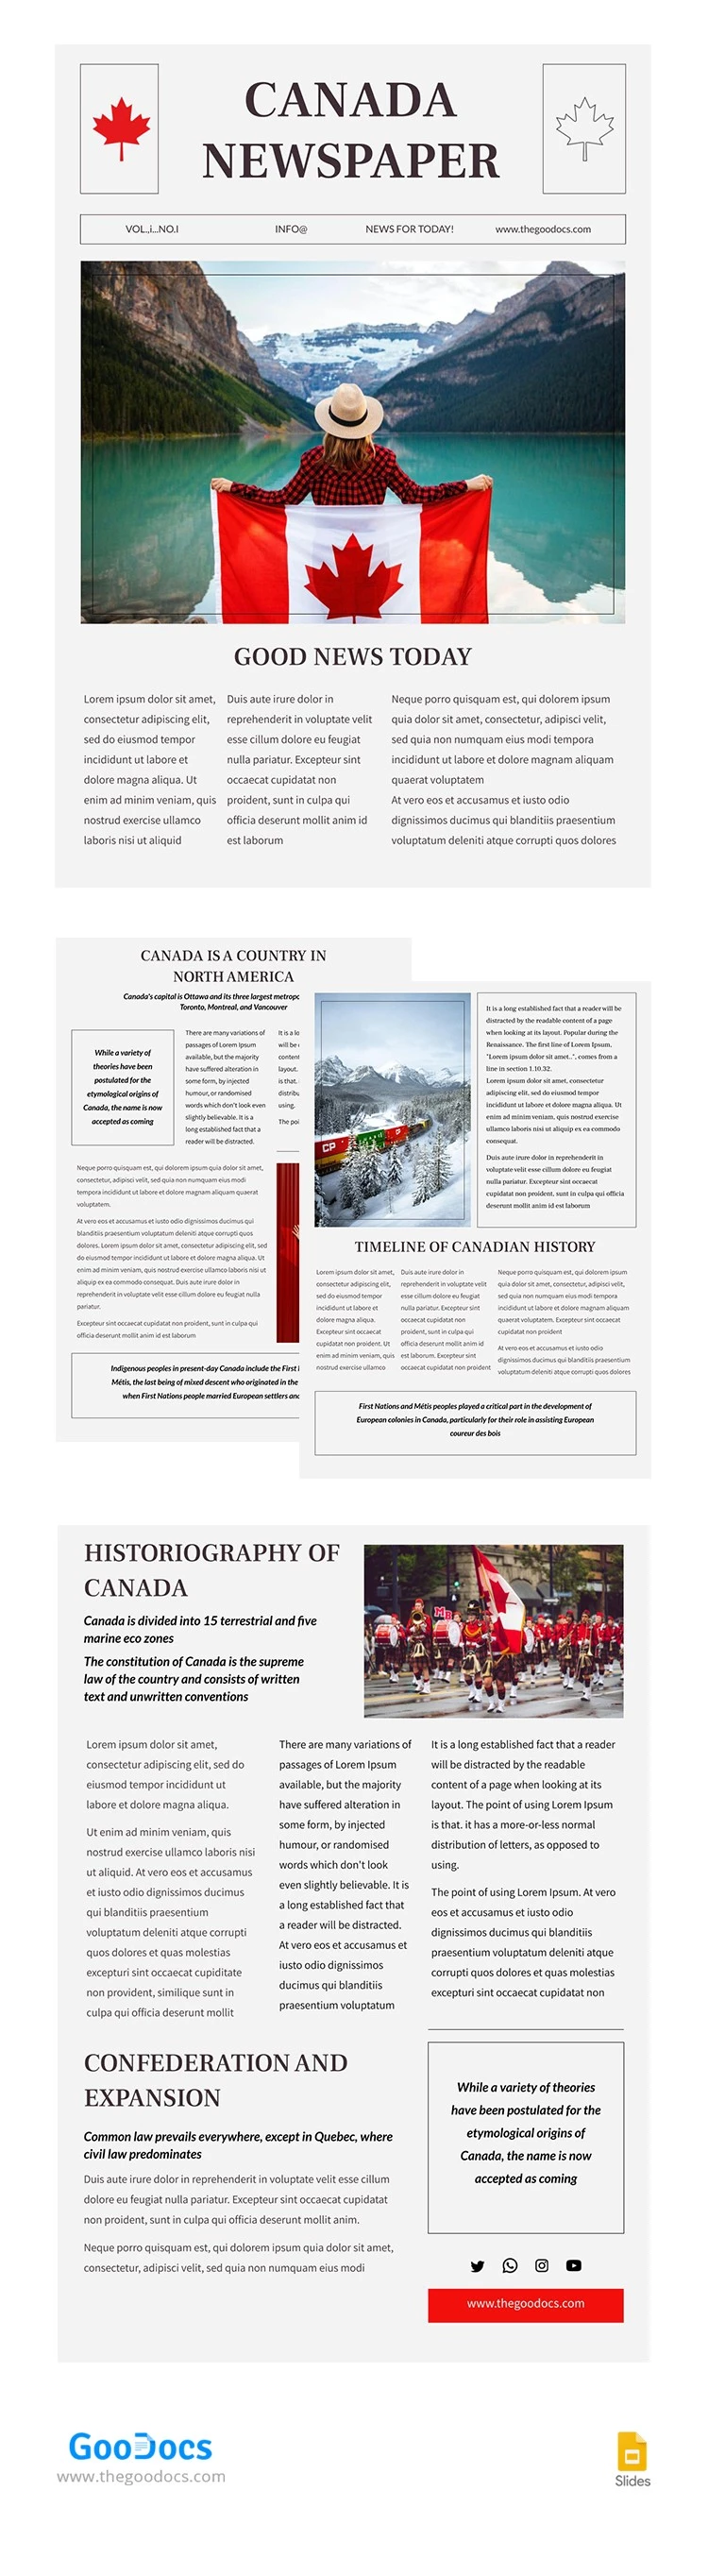 Canada Newspaper - free Google Docs Template - 10065739